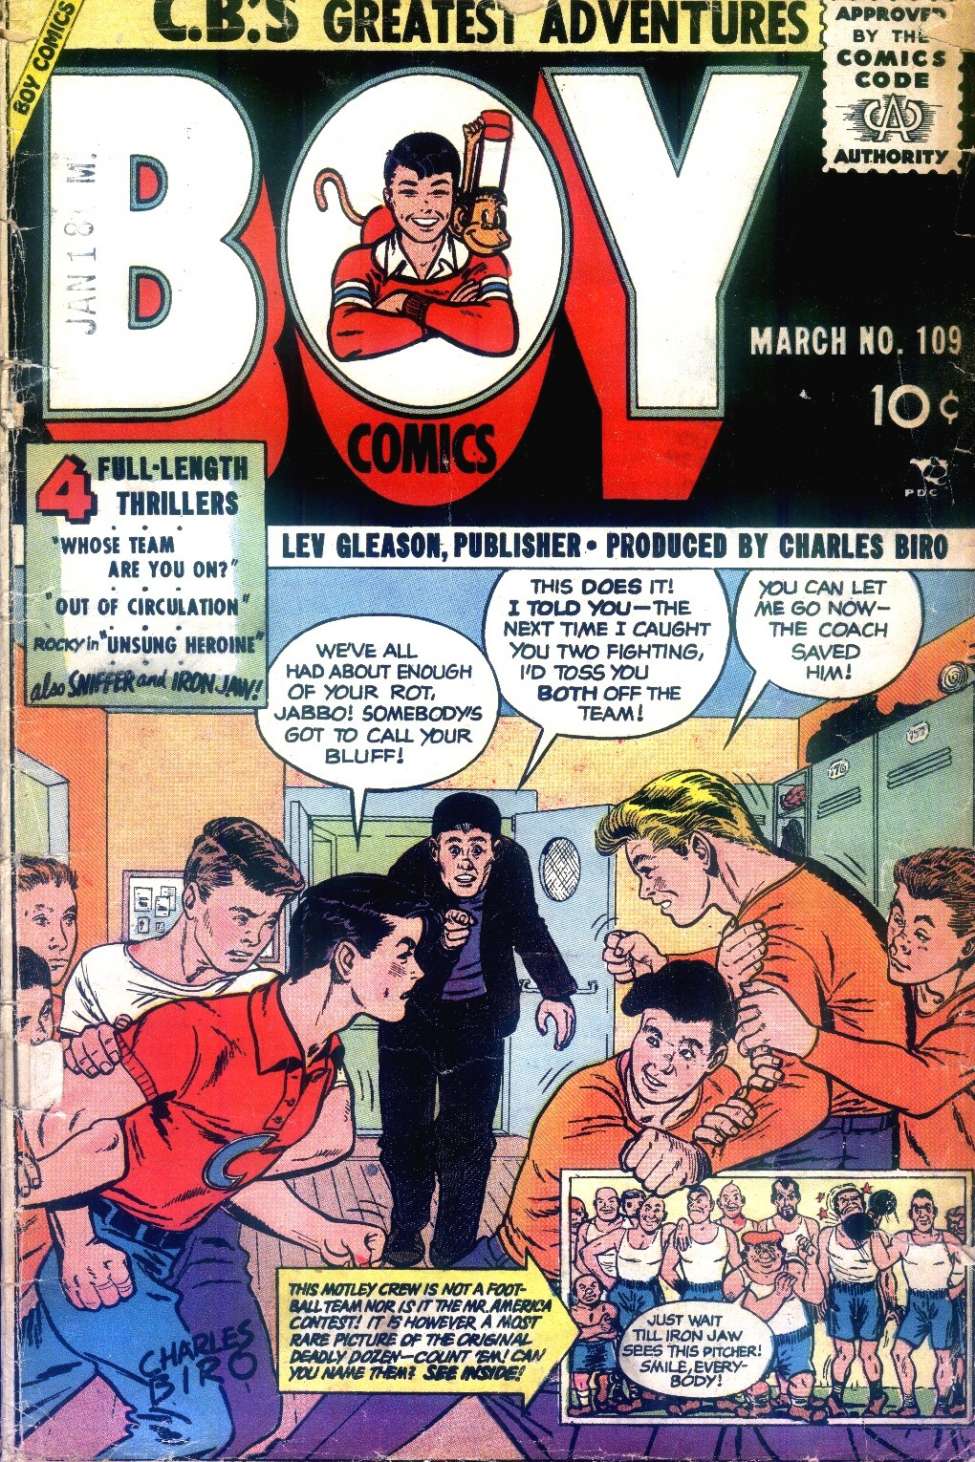 Comic Book Cover For Boy Comics 109